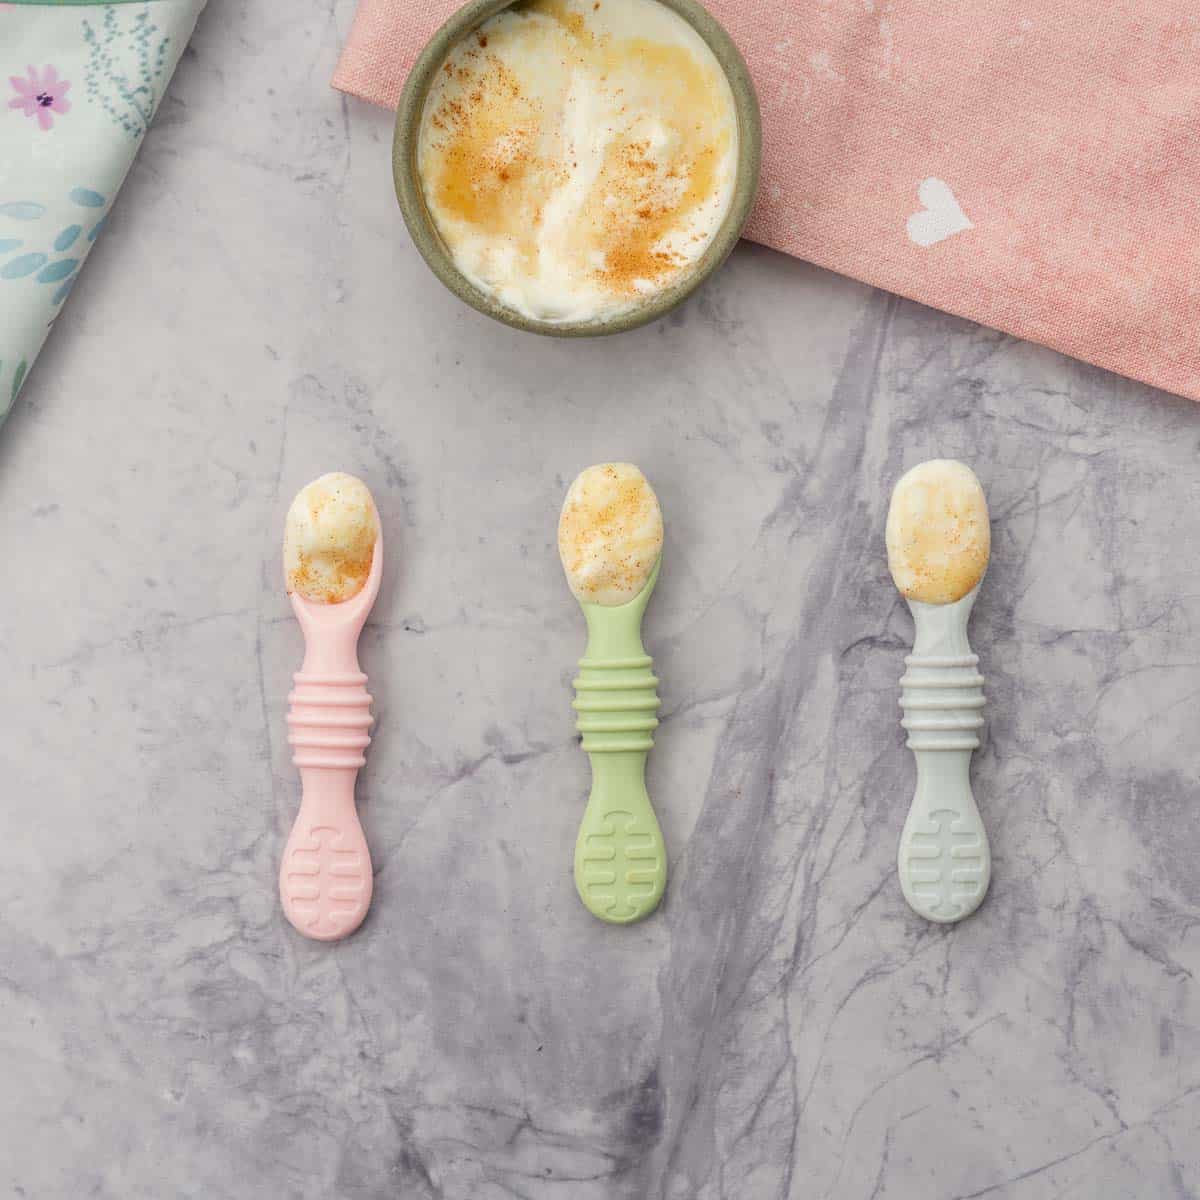 Three short handled baby spoons loaded with yogurt.